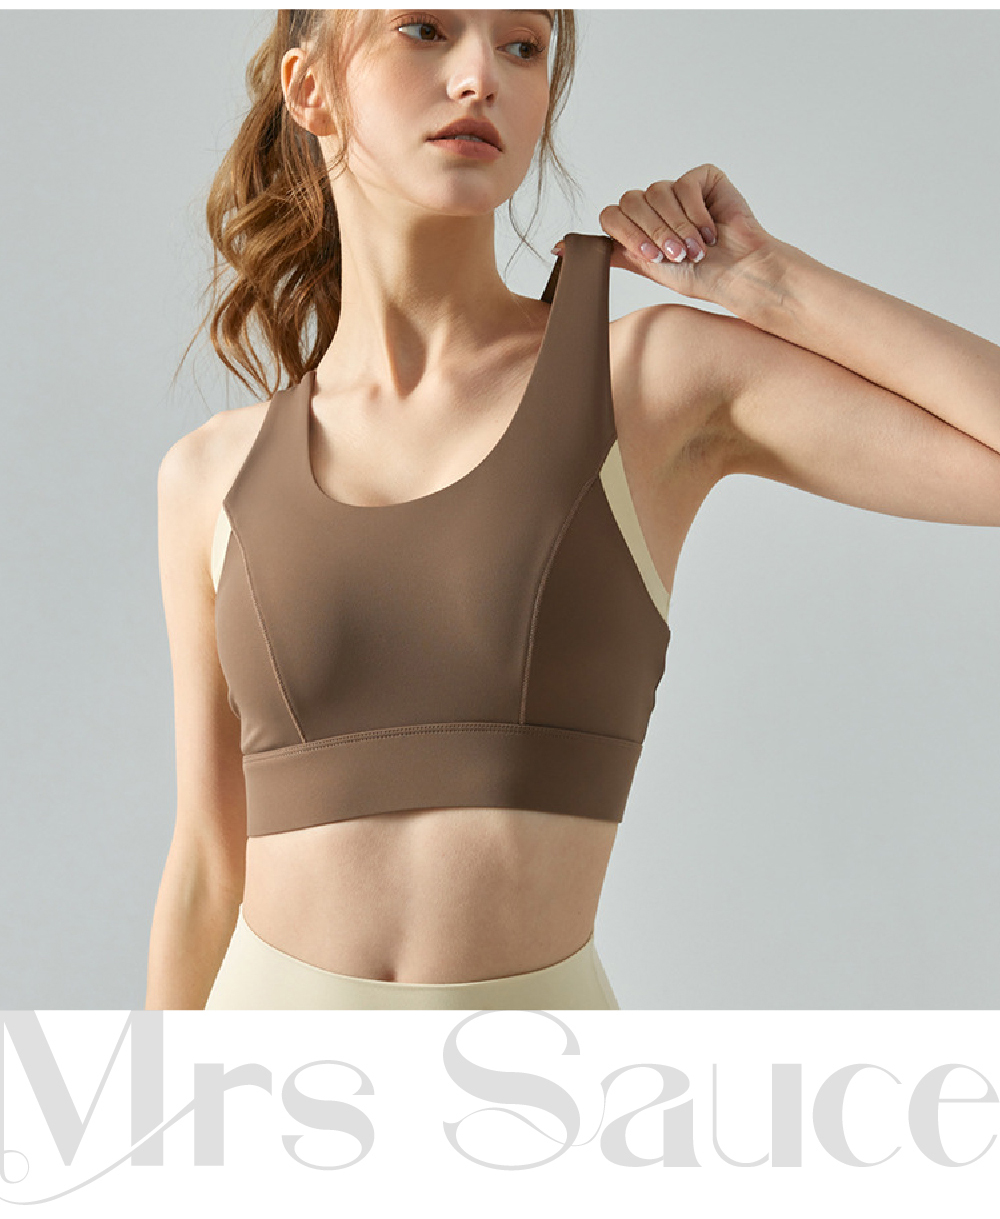 Yoga vest chest pad arc hem beauty back suspender sports underwear -  Chrmplx Store